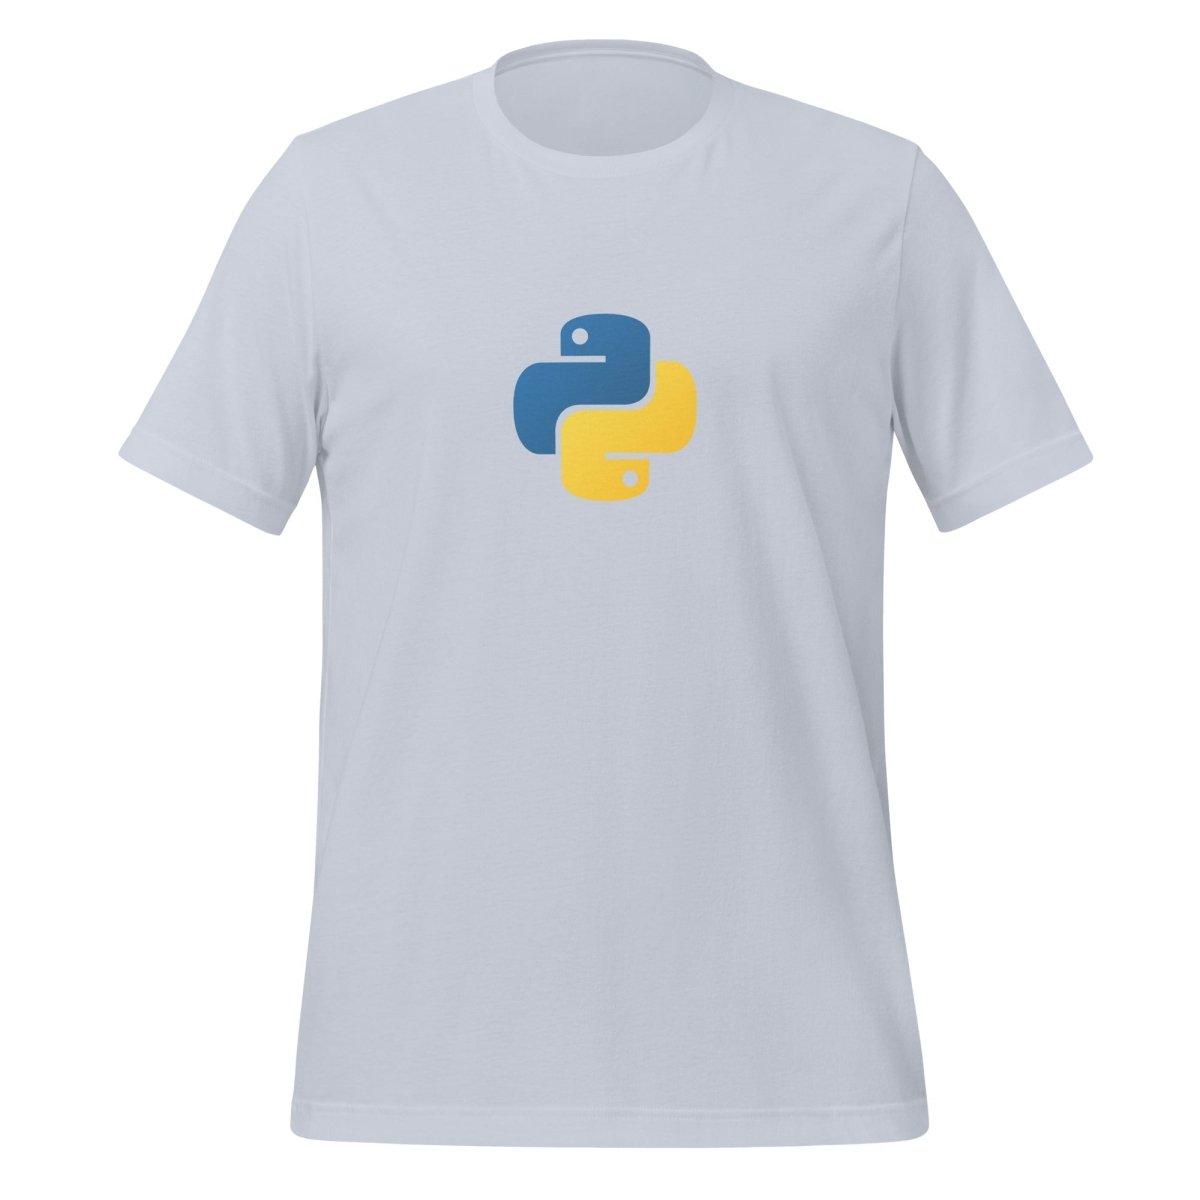 Python Small Icon T - Shirt (unisex) - Light Blue - AI Store